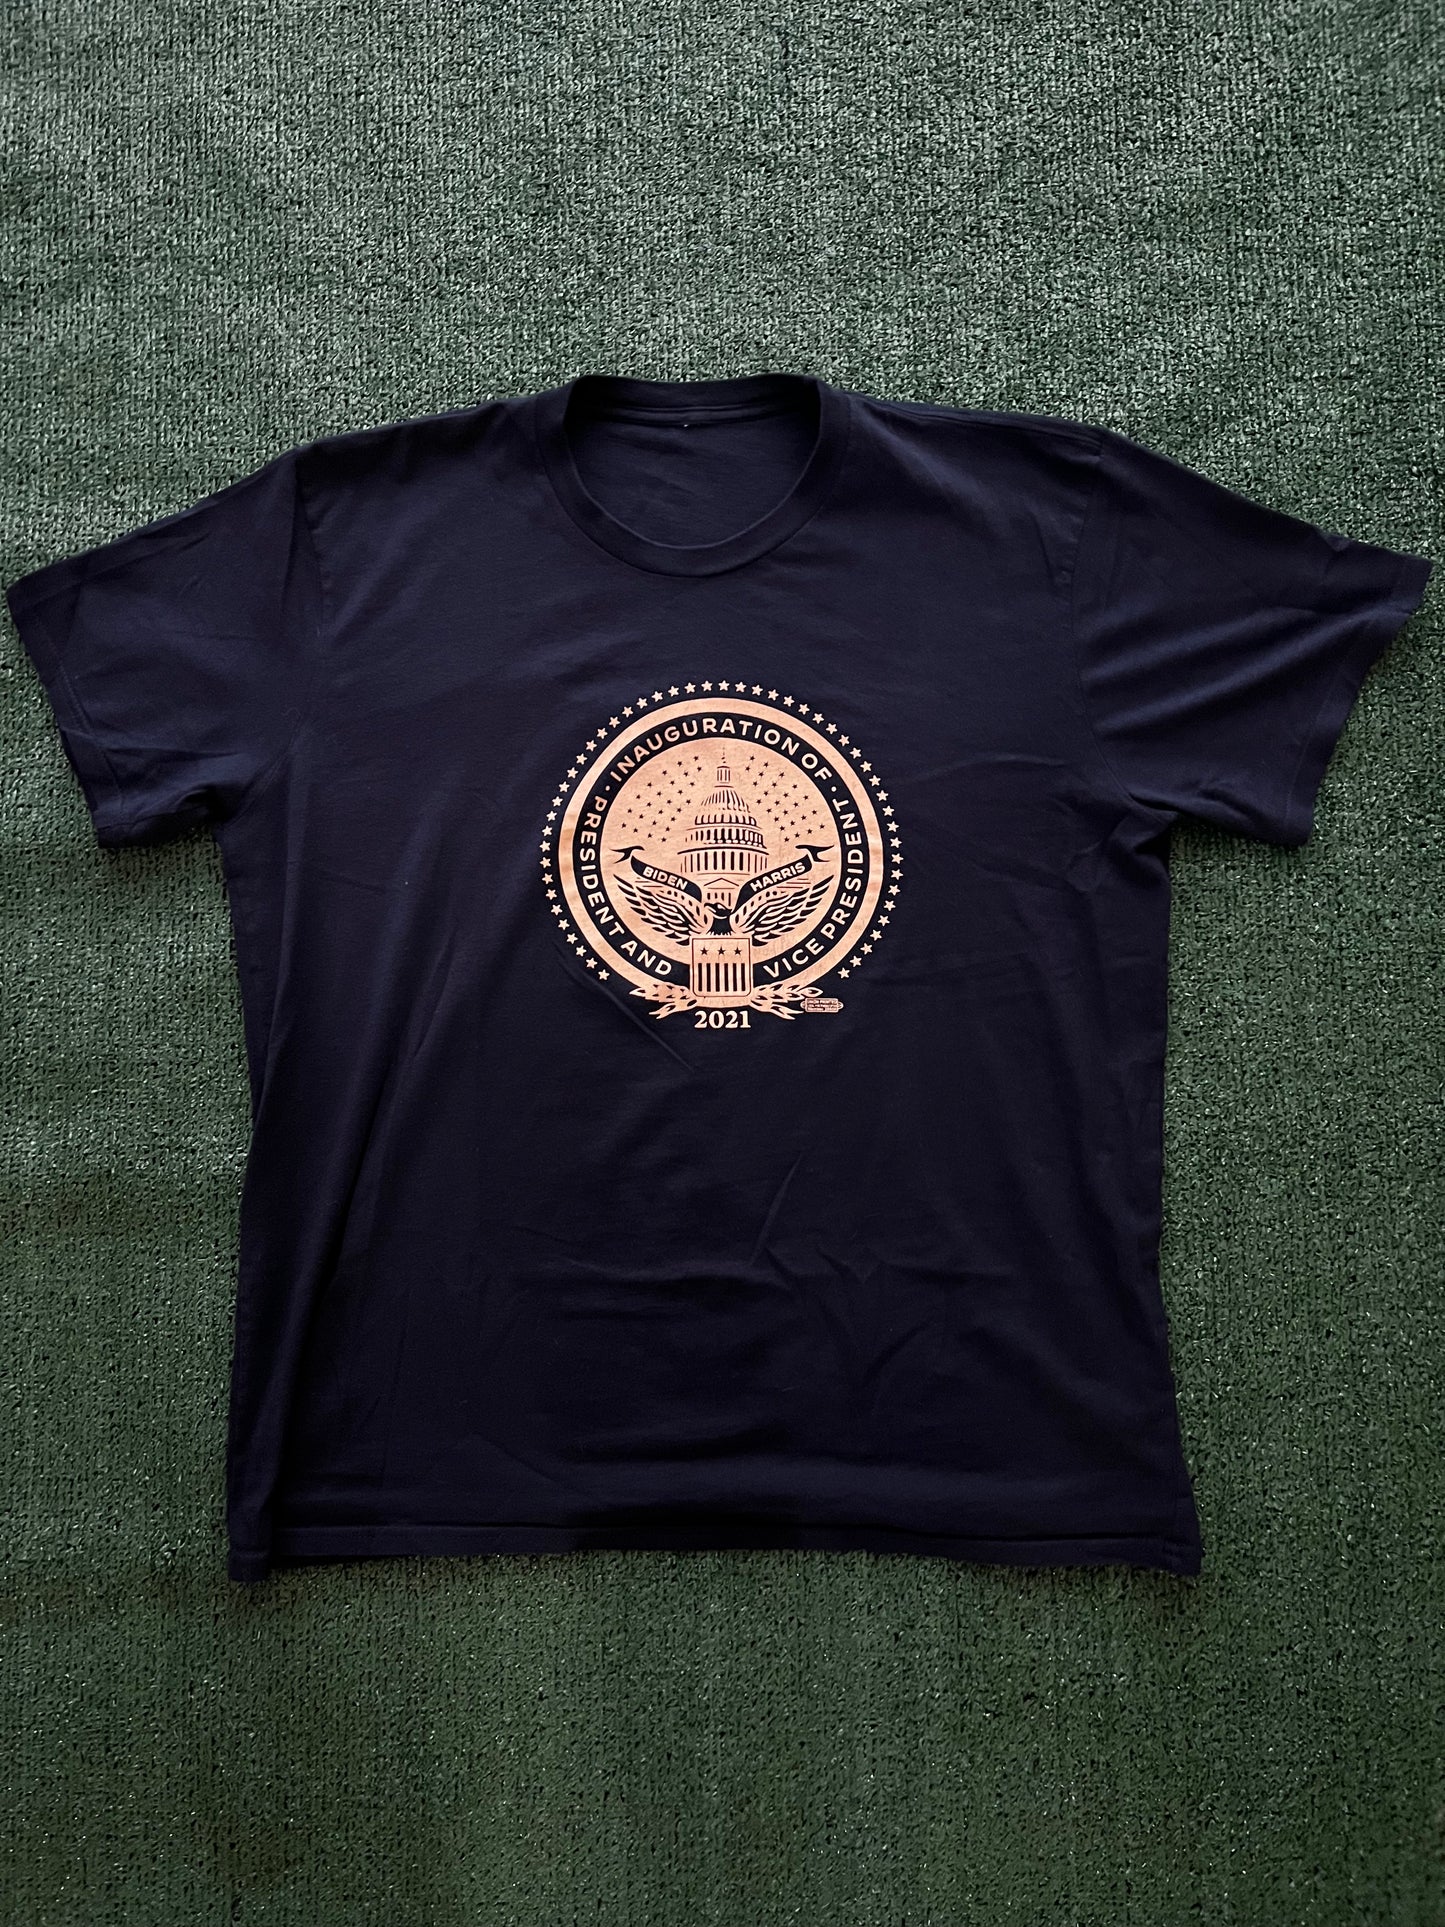 Blue 2021 Biden Inauguration T shirt (Medium)